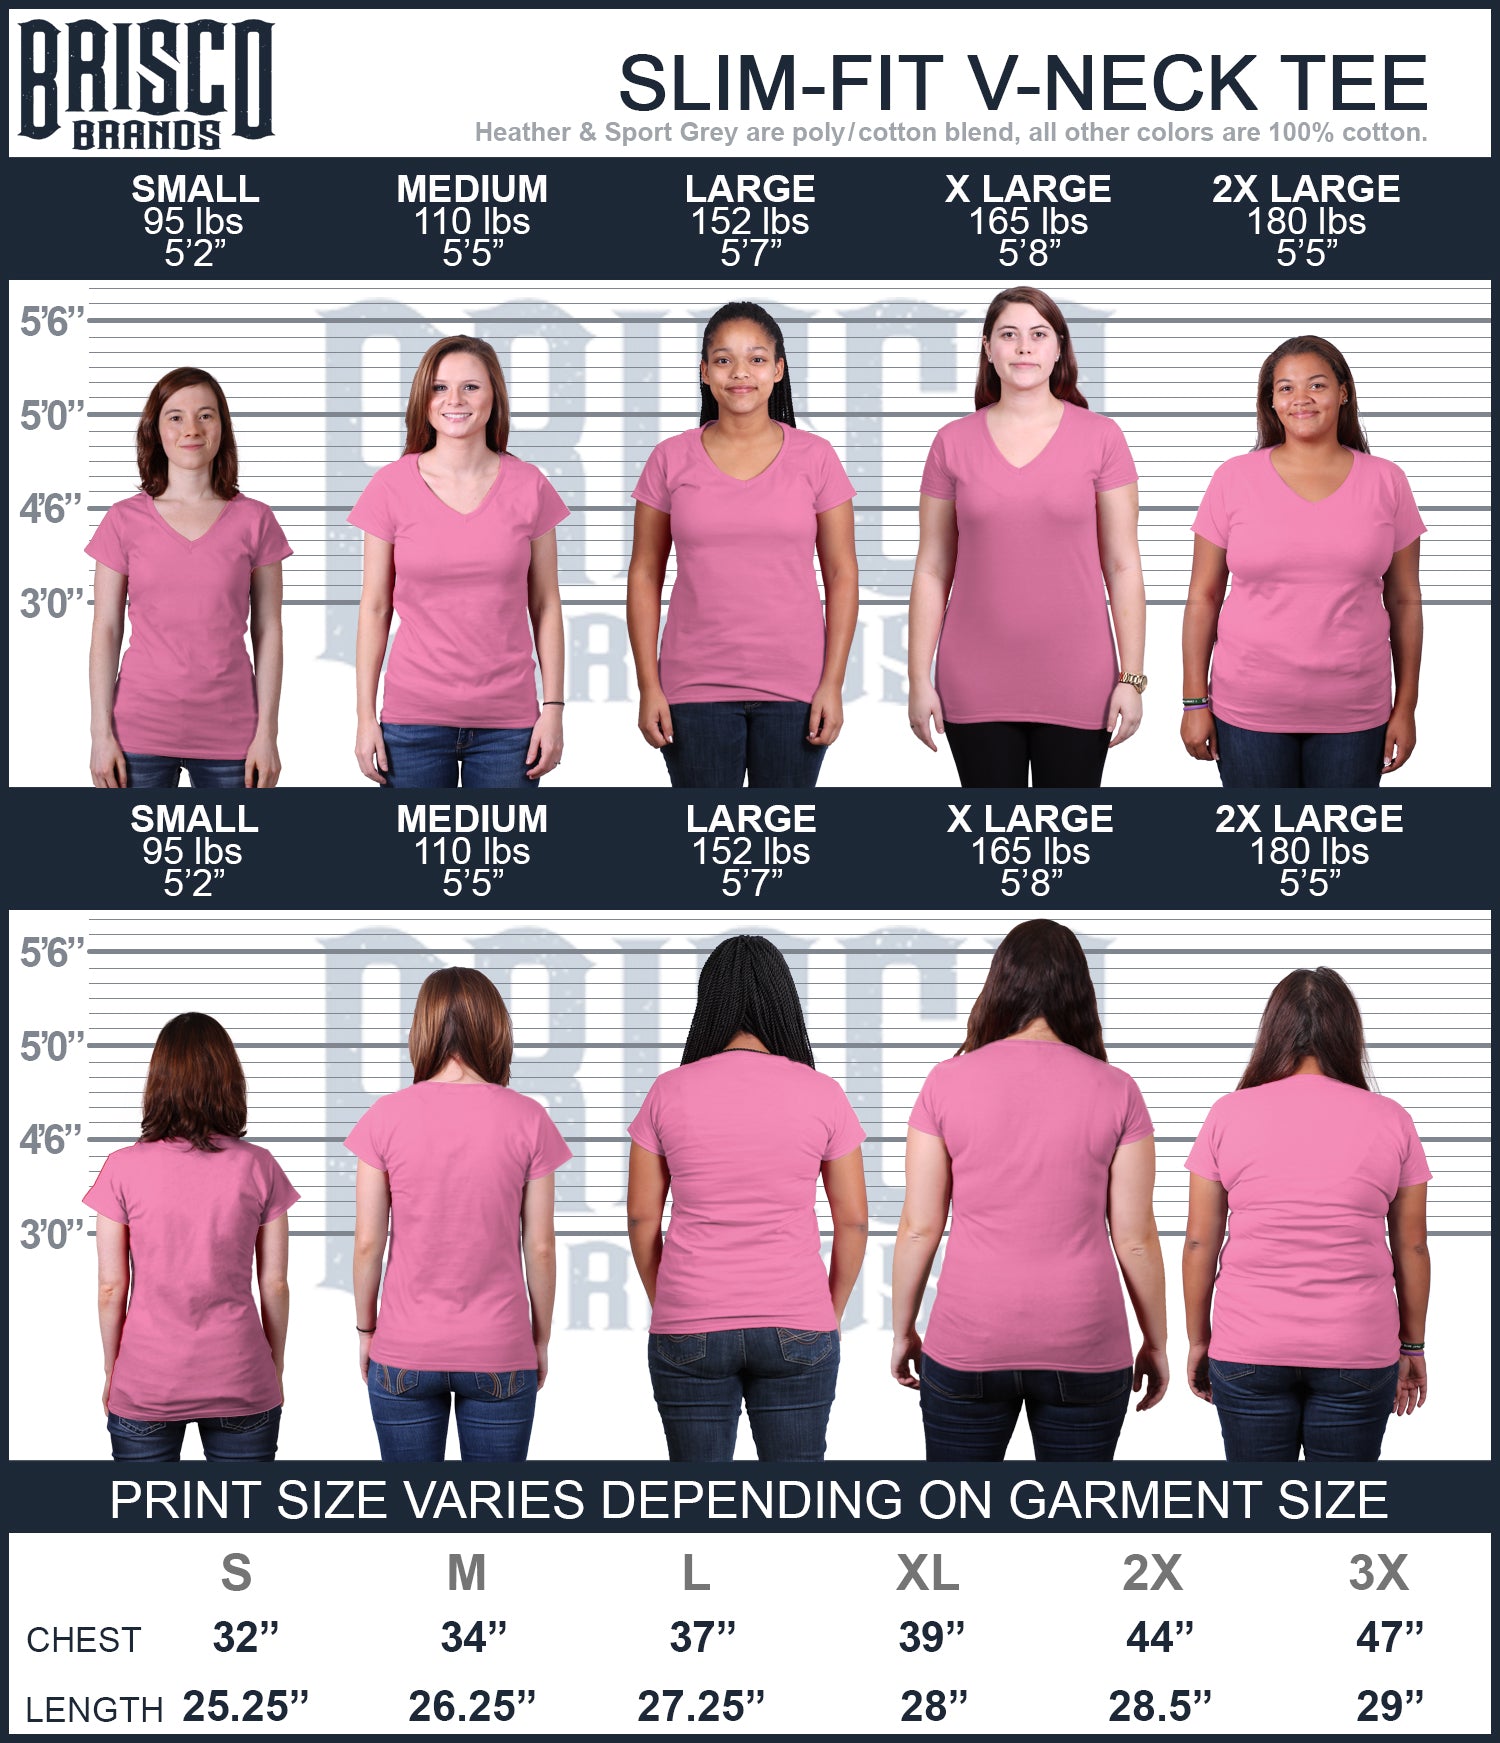 Christian Strong Women's Pink White Ribbon Ladies T-Shirt Fight Cancer Faith, Black / Medium